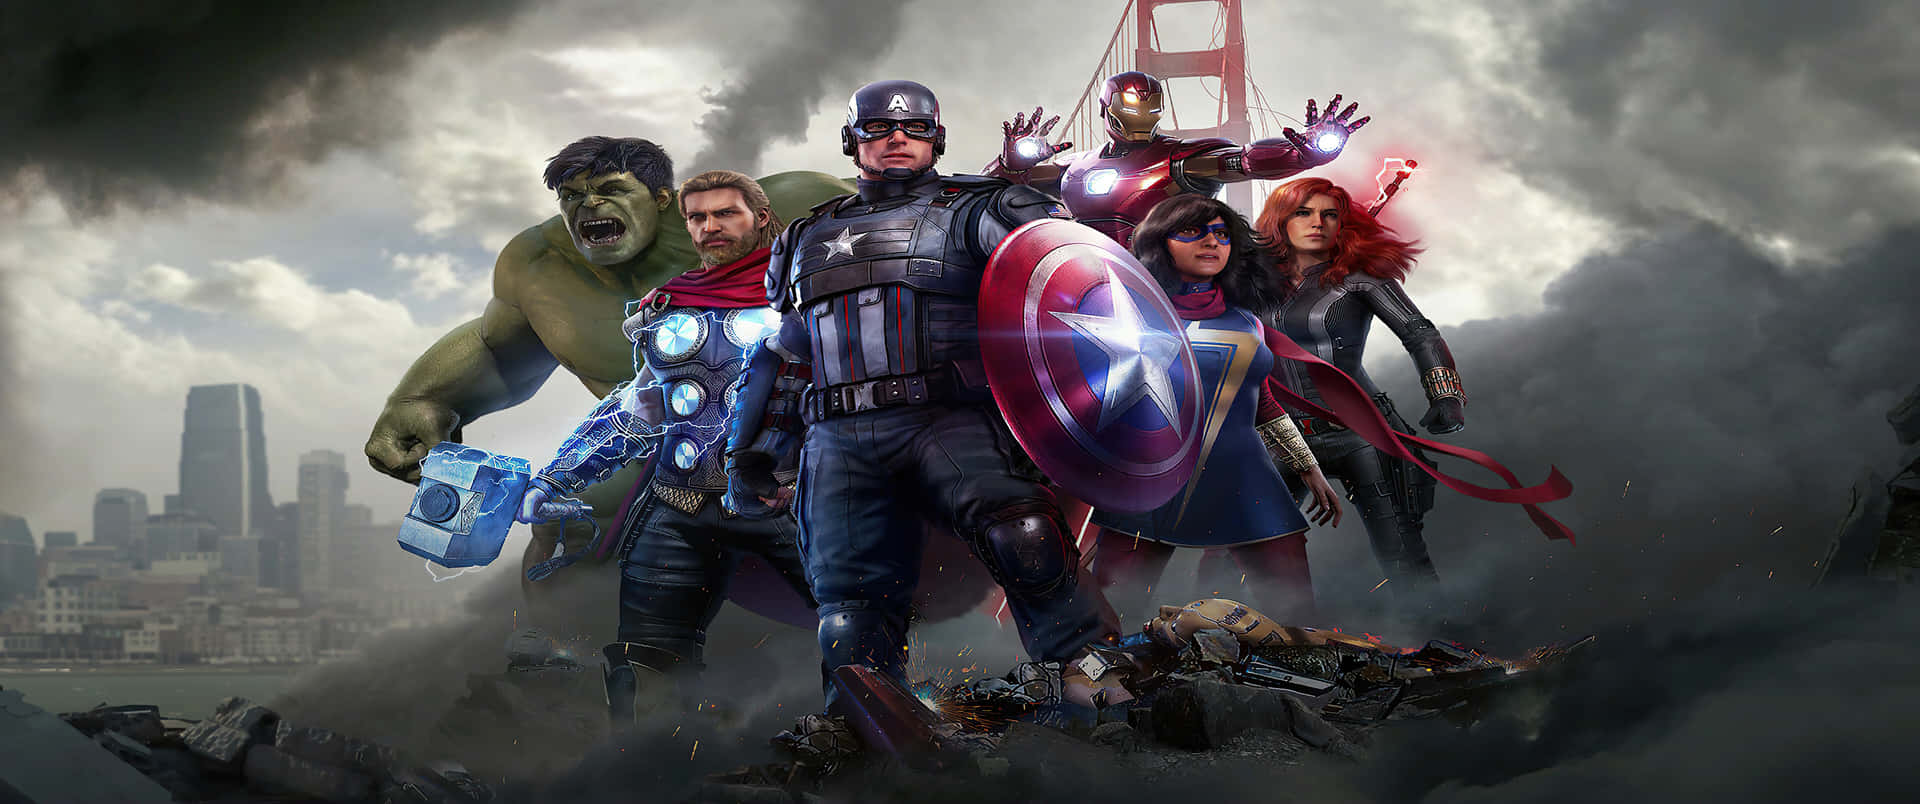 Avengerssfondi Sfondi Sfondi Sfondi Sfondi Sfondi Avengers Sfondo